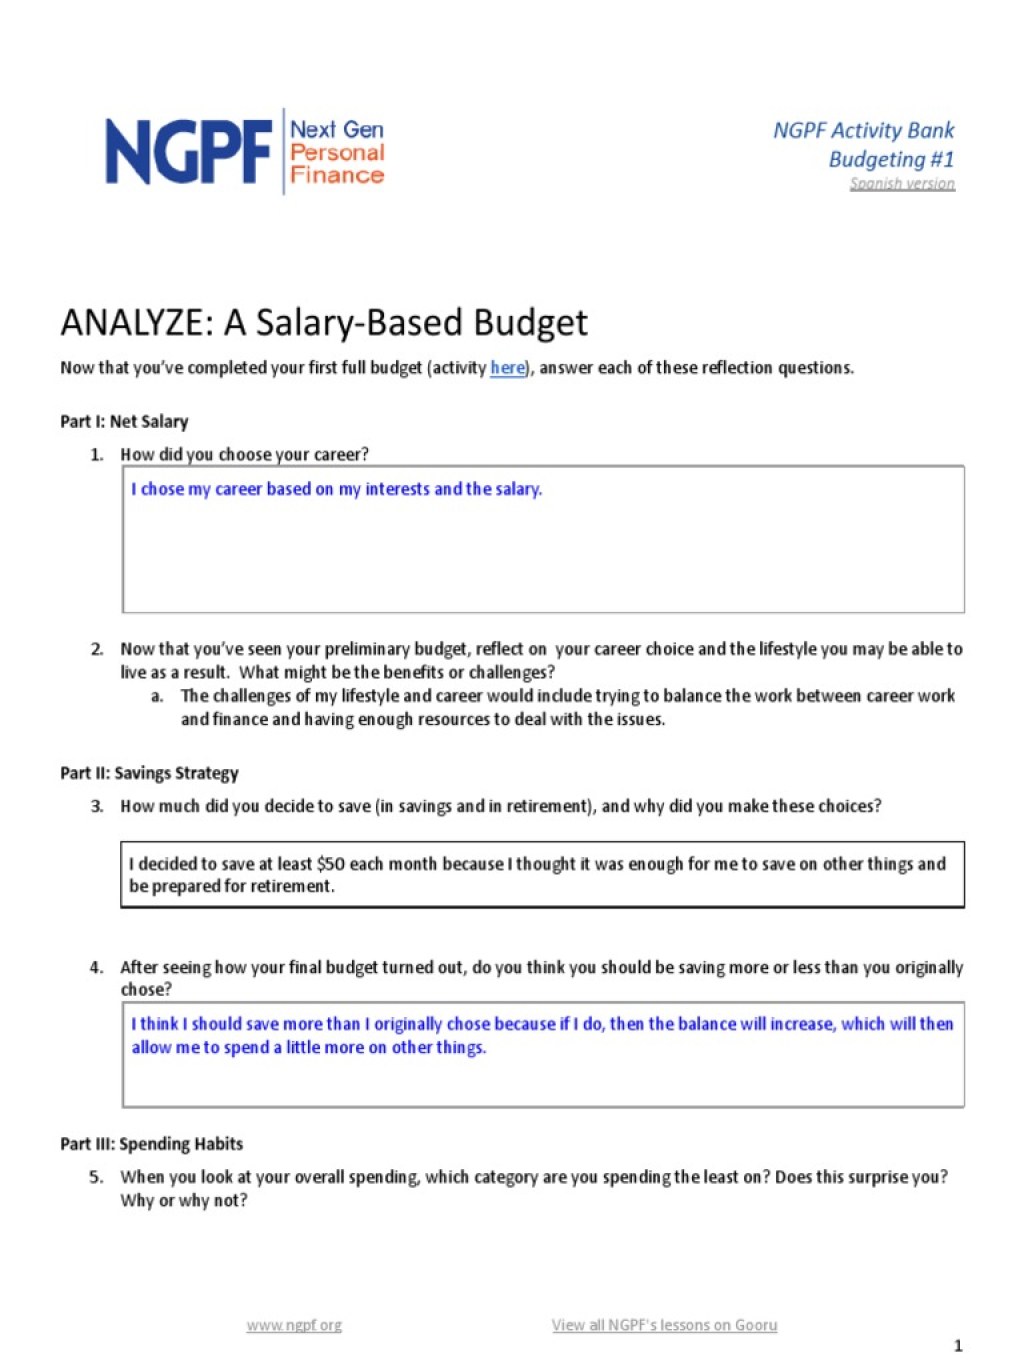 rj analyze a salary based budget steven n pdf government